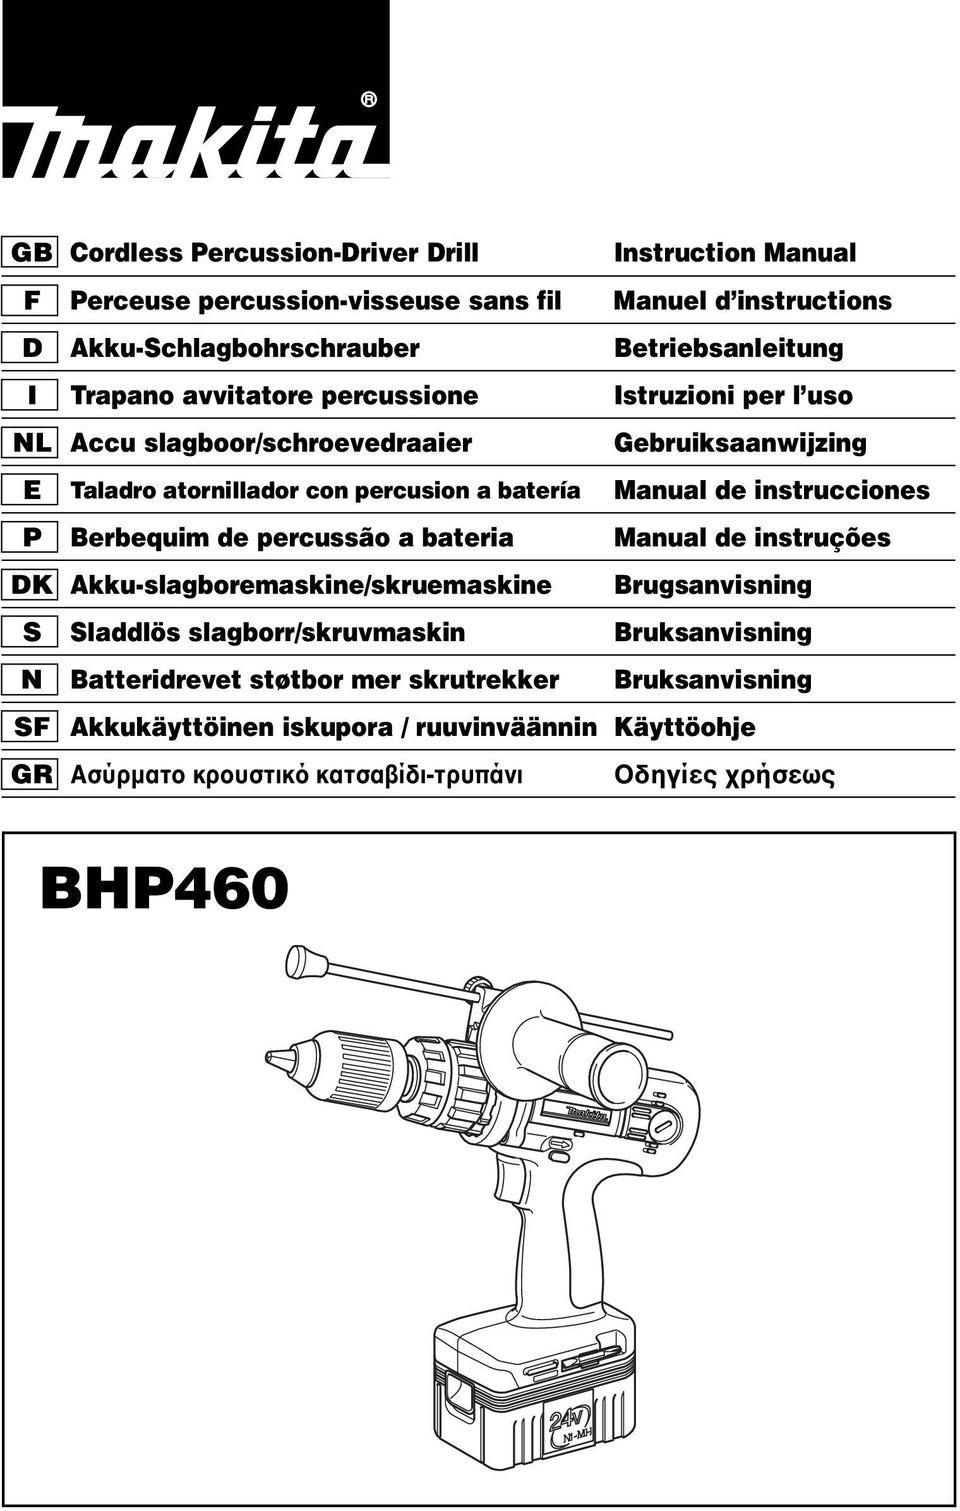 instrucciones P Berbequim de percussão a bateria Manual de instruções DK Akku-slagboremaskine/skruemaskine Brugsanvisning S Sladdlös slagborr/skruvmaskin